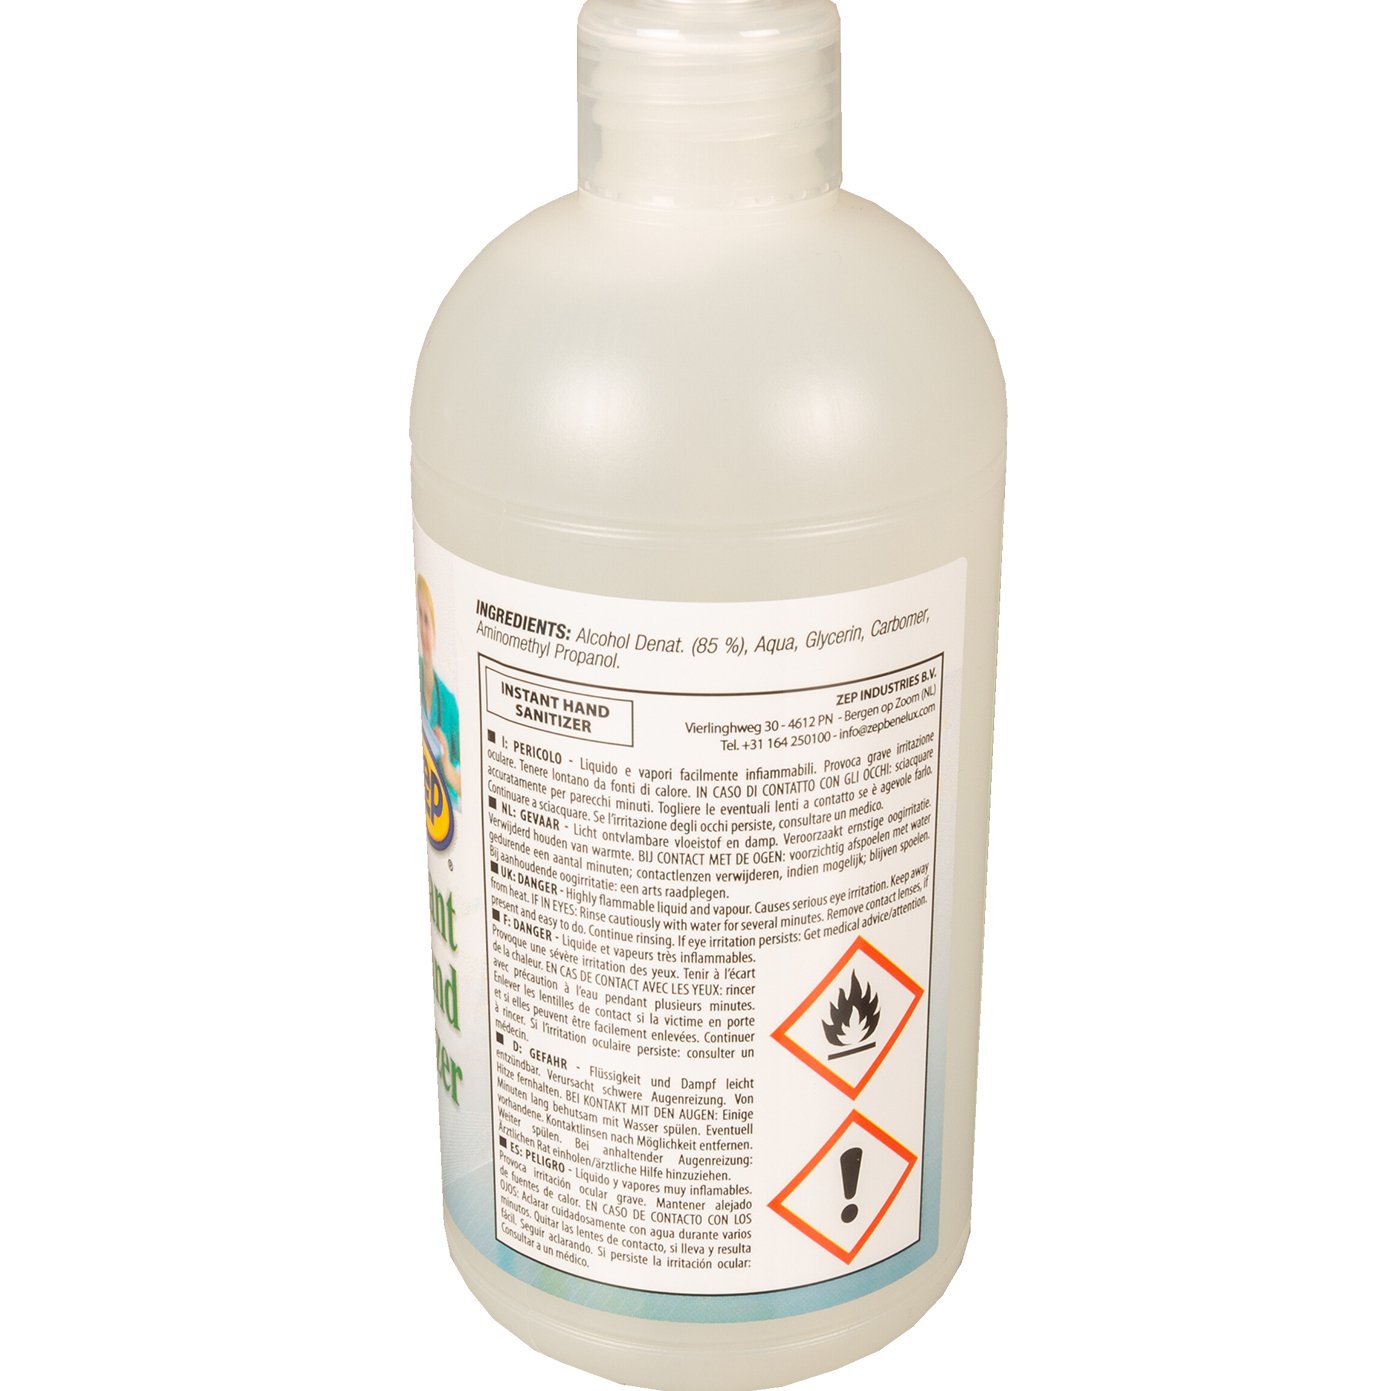 Desinfectie handgel sanitizer 500 ml